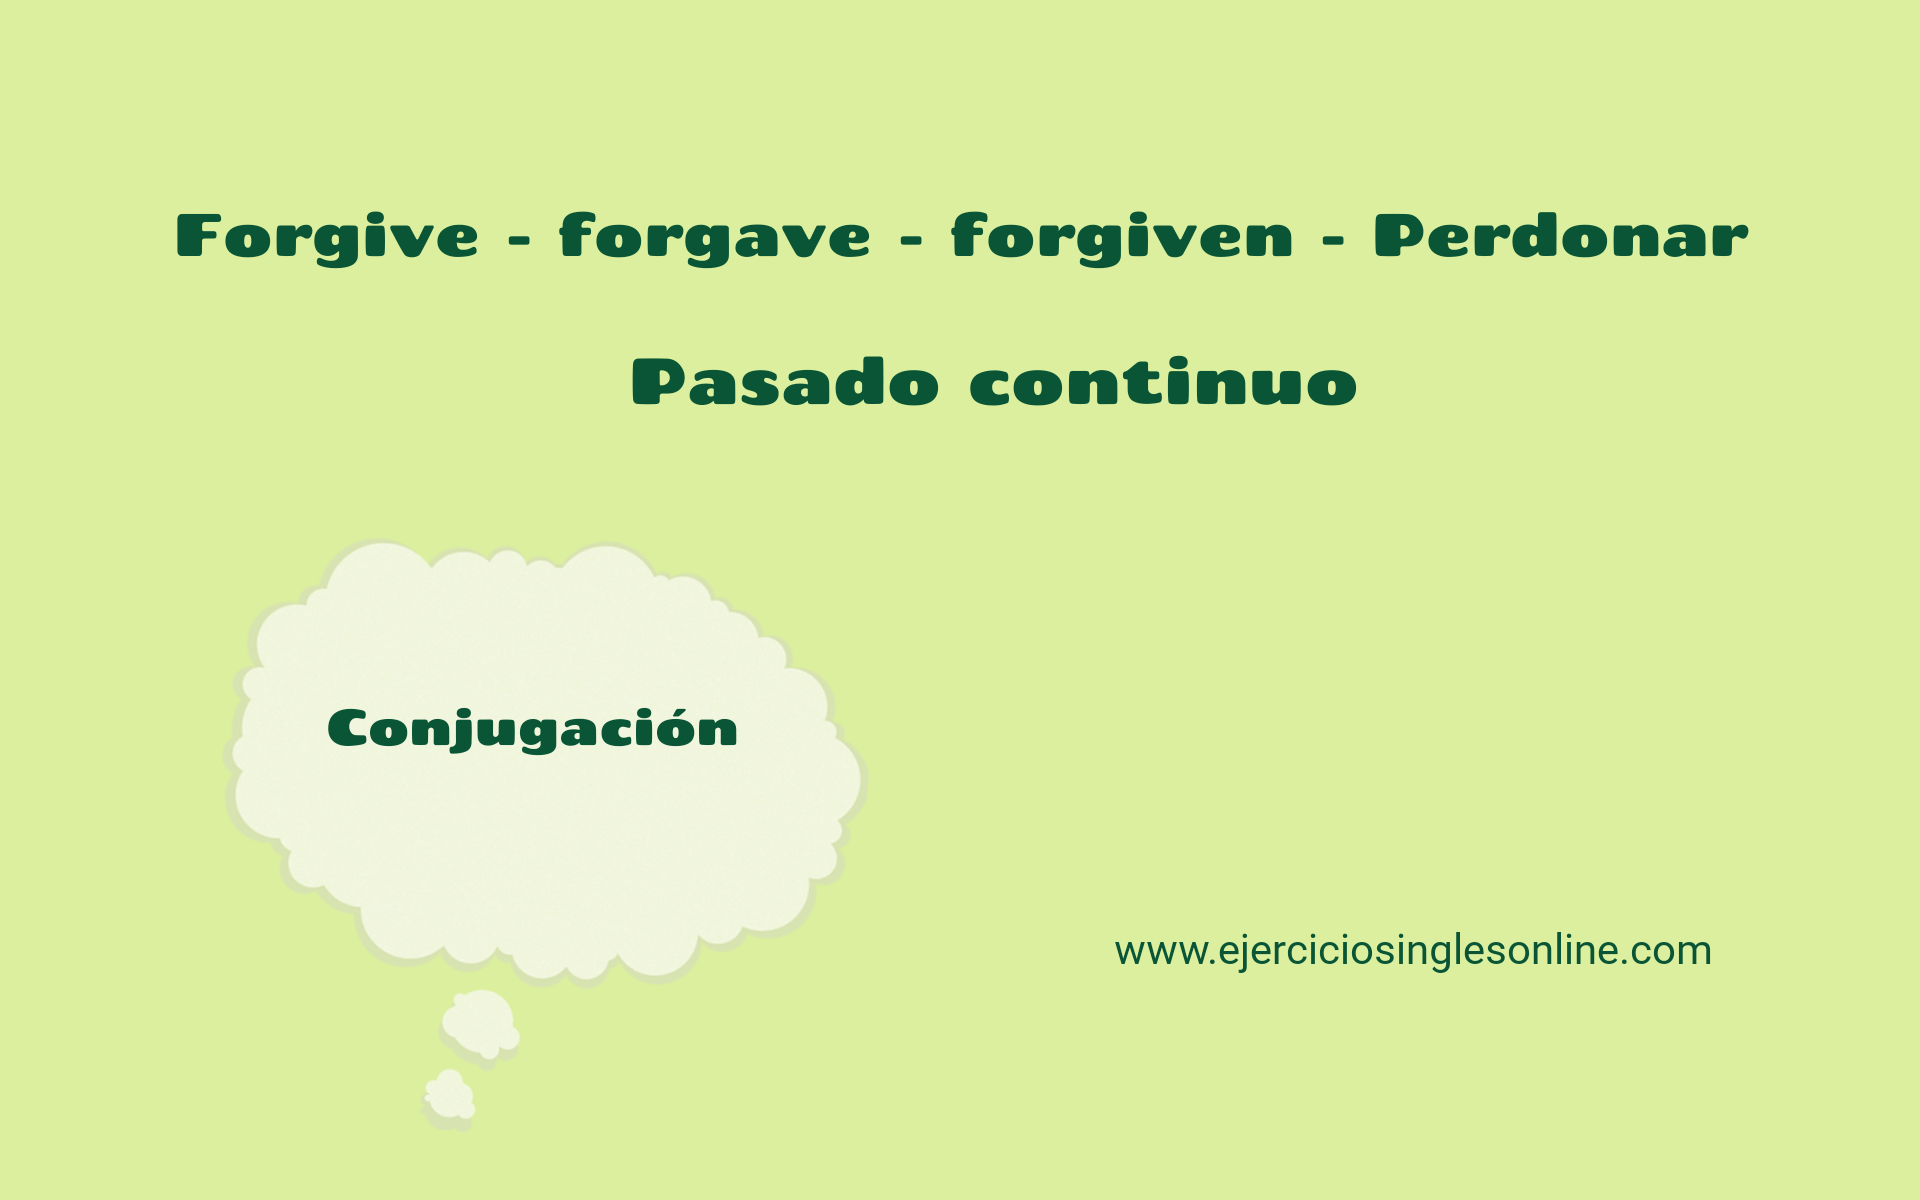 Forgive - Pasado continuo - Conjugación